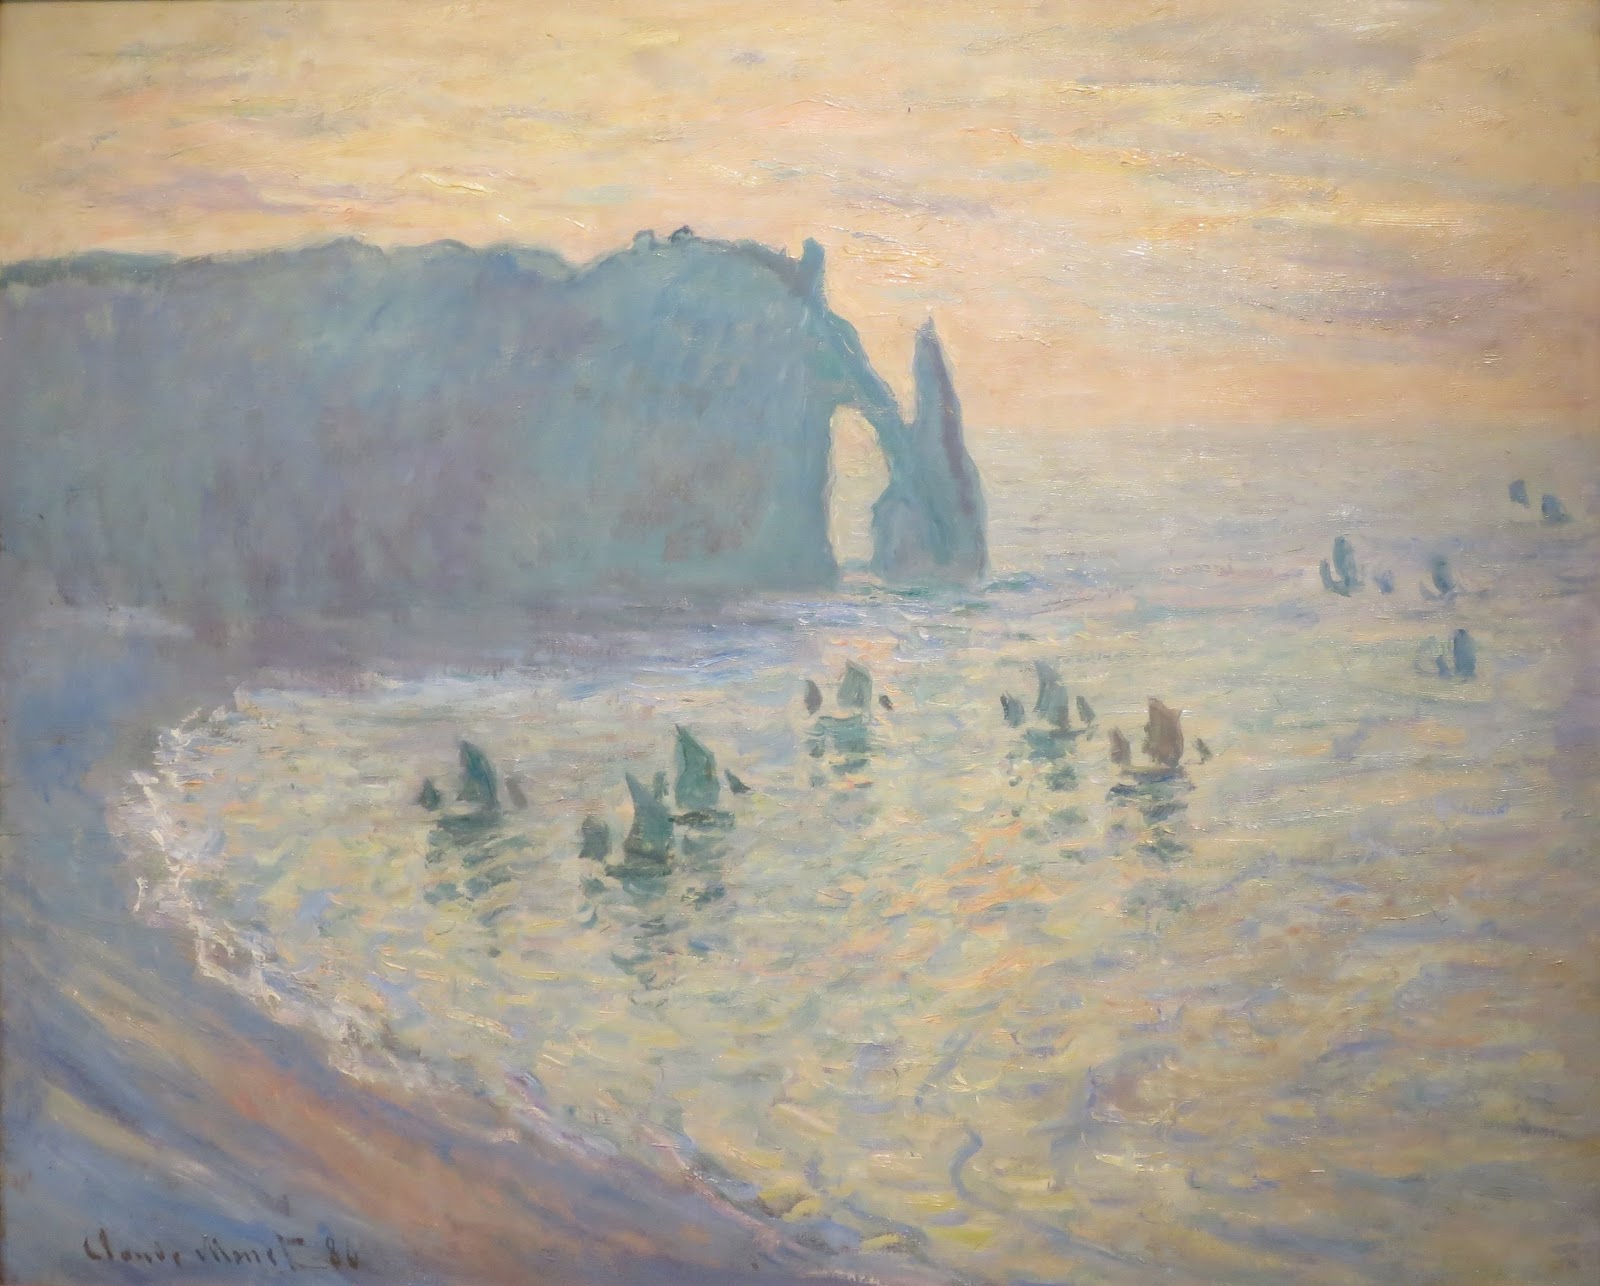 Claude+Monet-1840-1926 (729).jpg